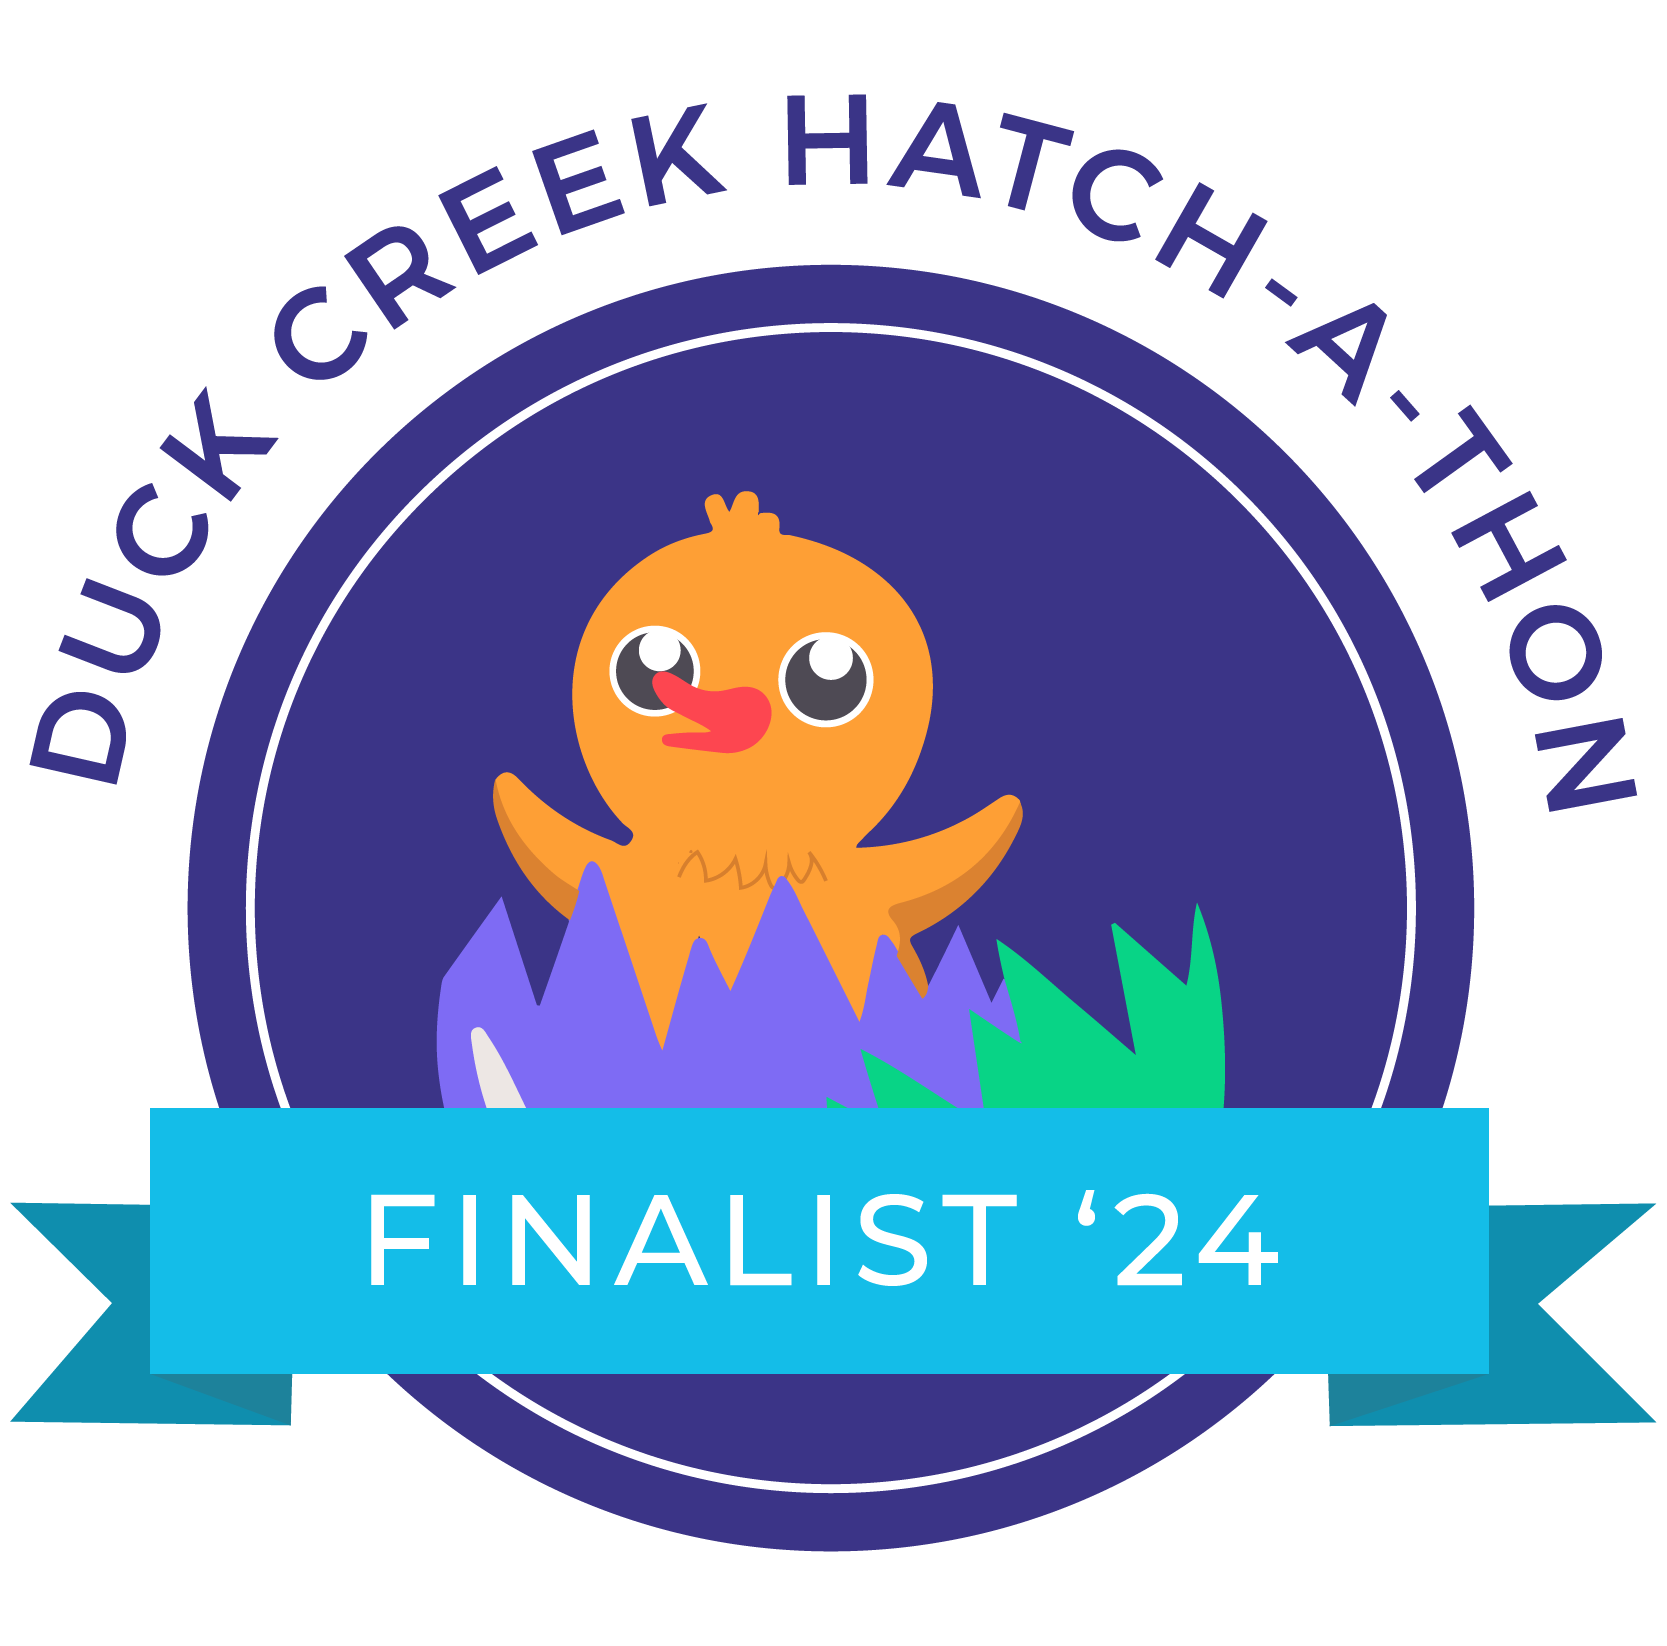 Duck Creek Hatch-a-thon_Finalist